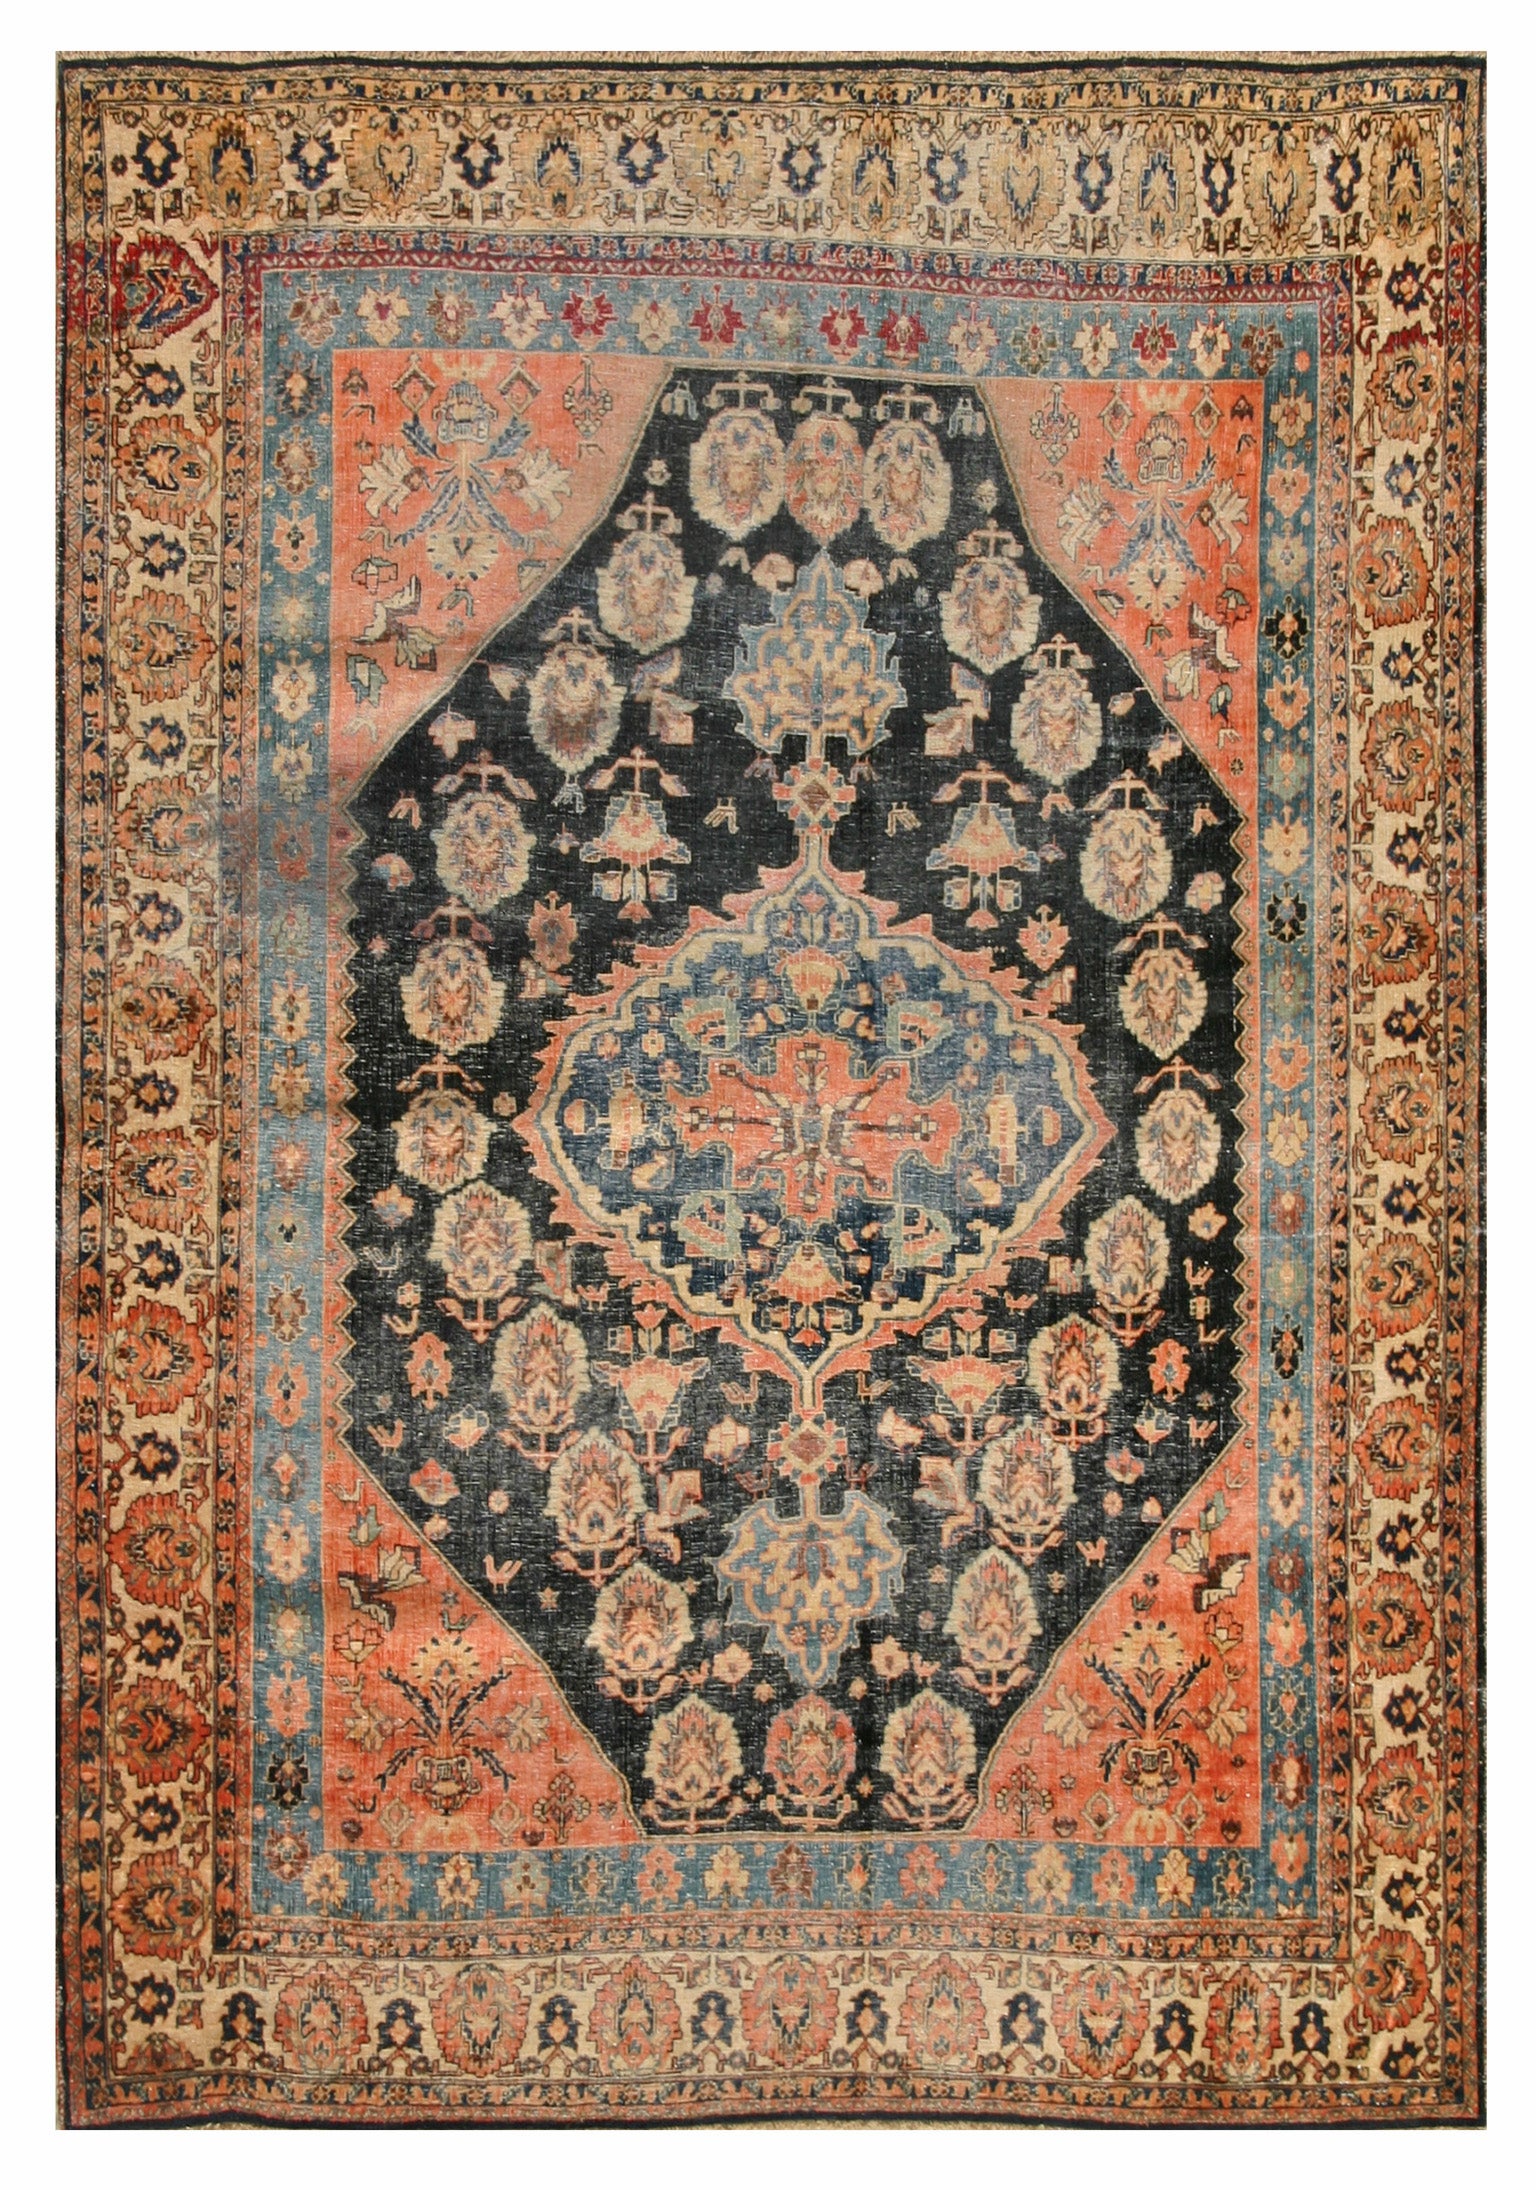 Late 19th Century S. Persian Ghashgaie Carpet ( 5'2" x 7'4" - 157 x 224 )